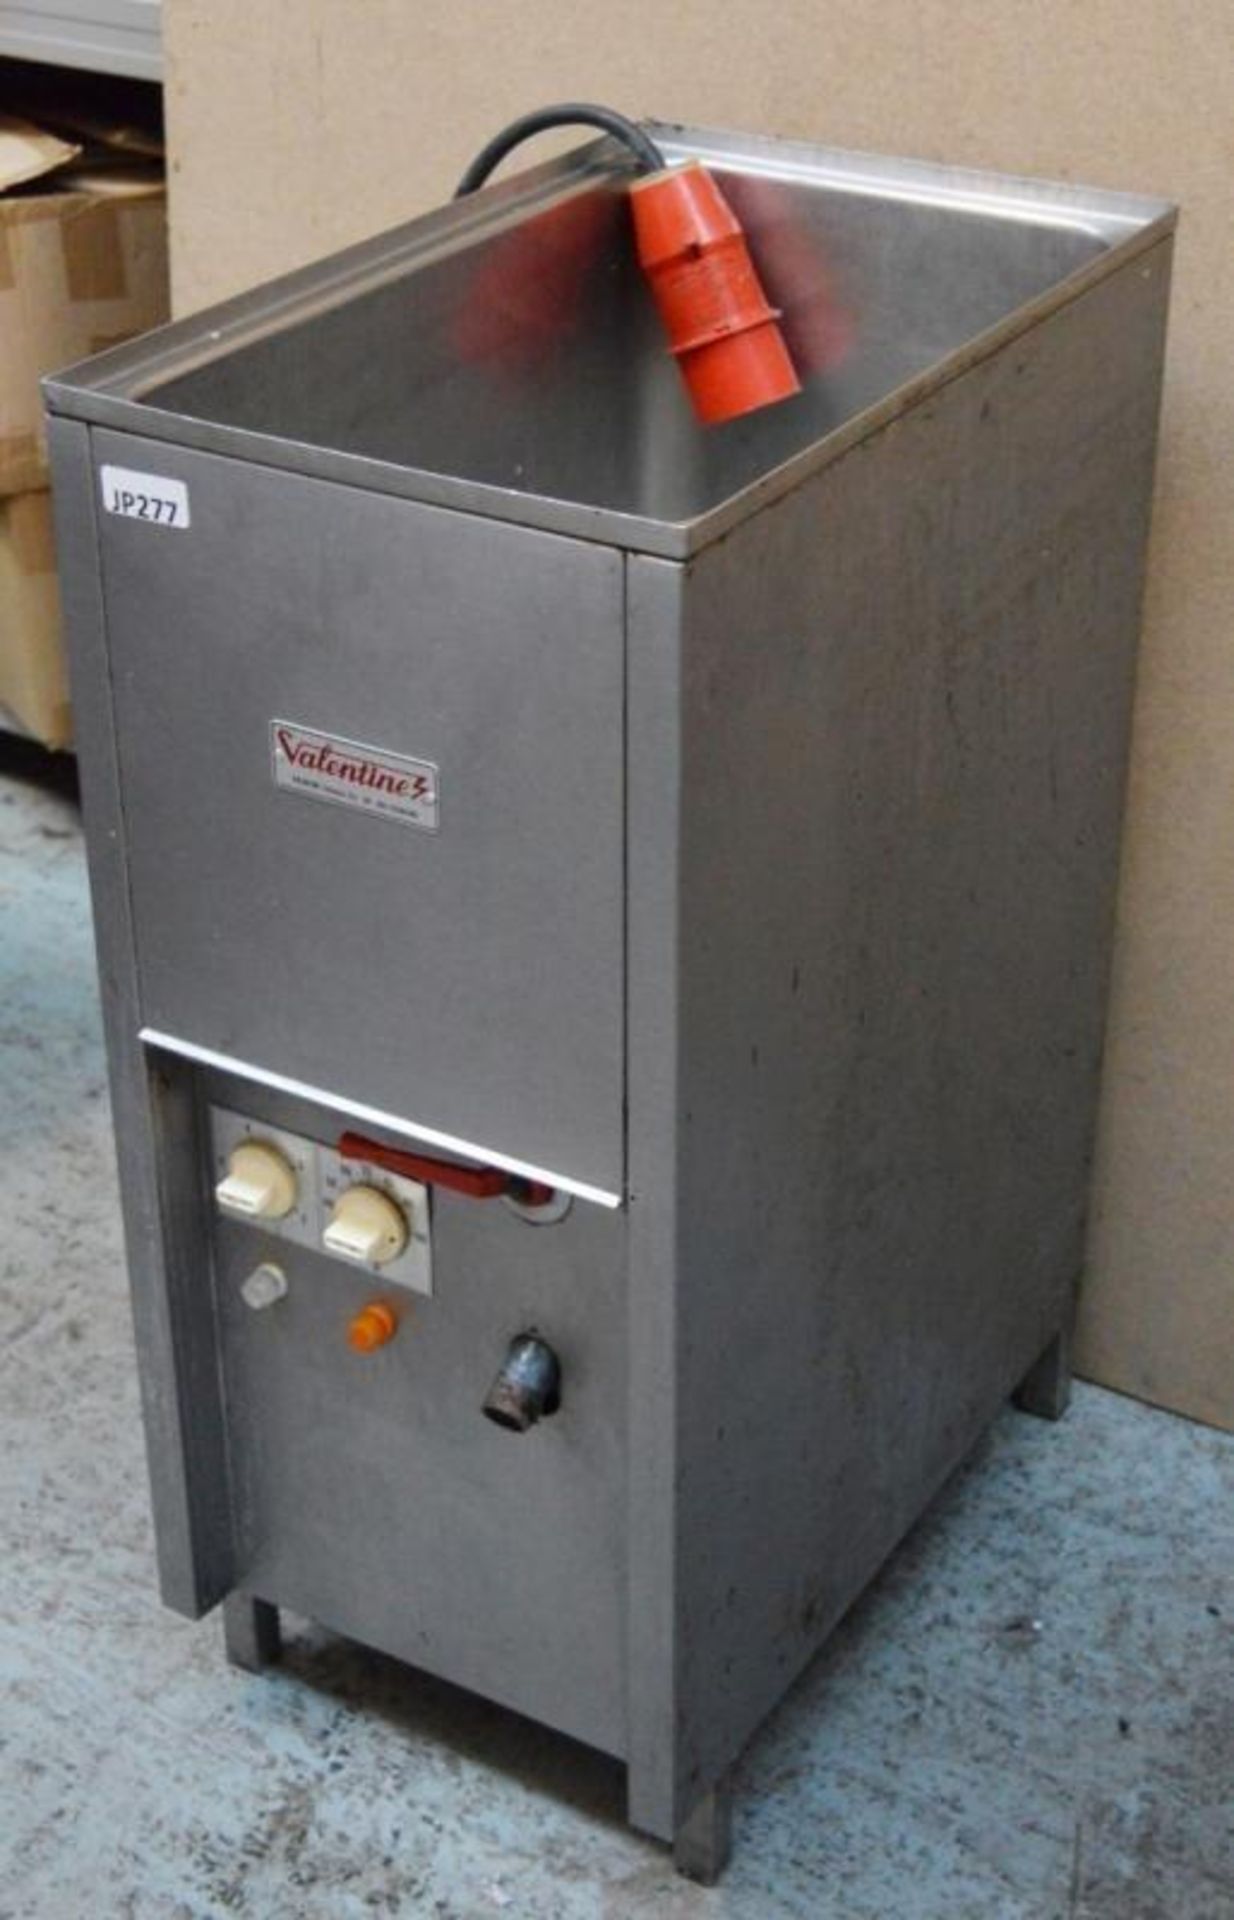 1 x Valentine VMC 1 Stainless Steel Freestanding Pasta Boiler - H83 x W35 x D65cms - 3 Phase - CL232